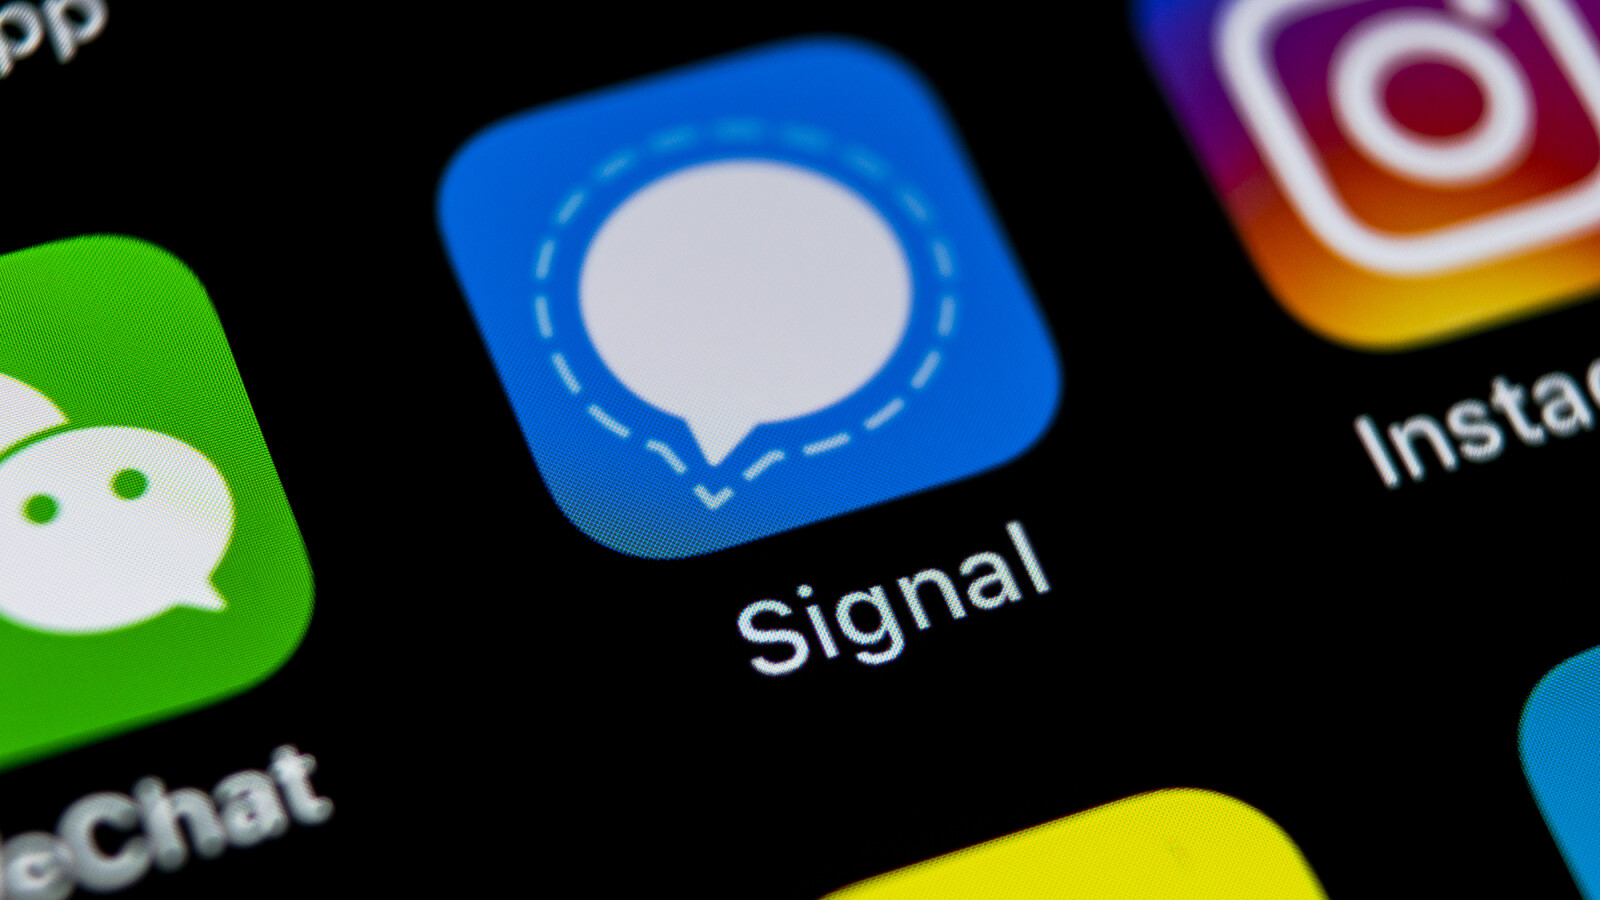 download Signal Messenger 6.27.1 free